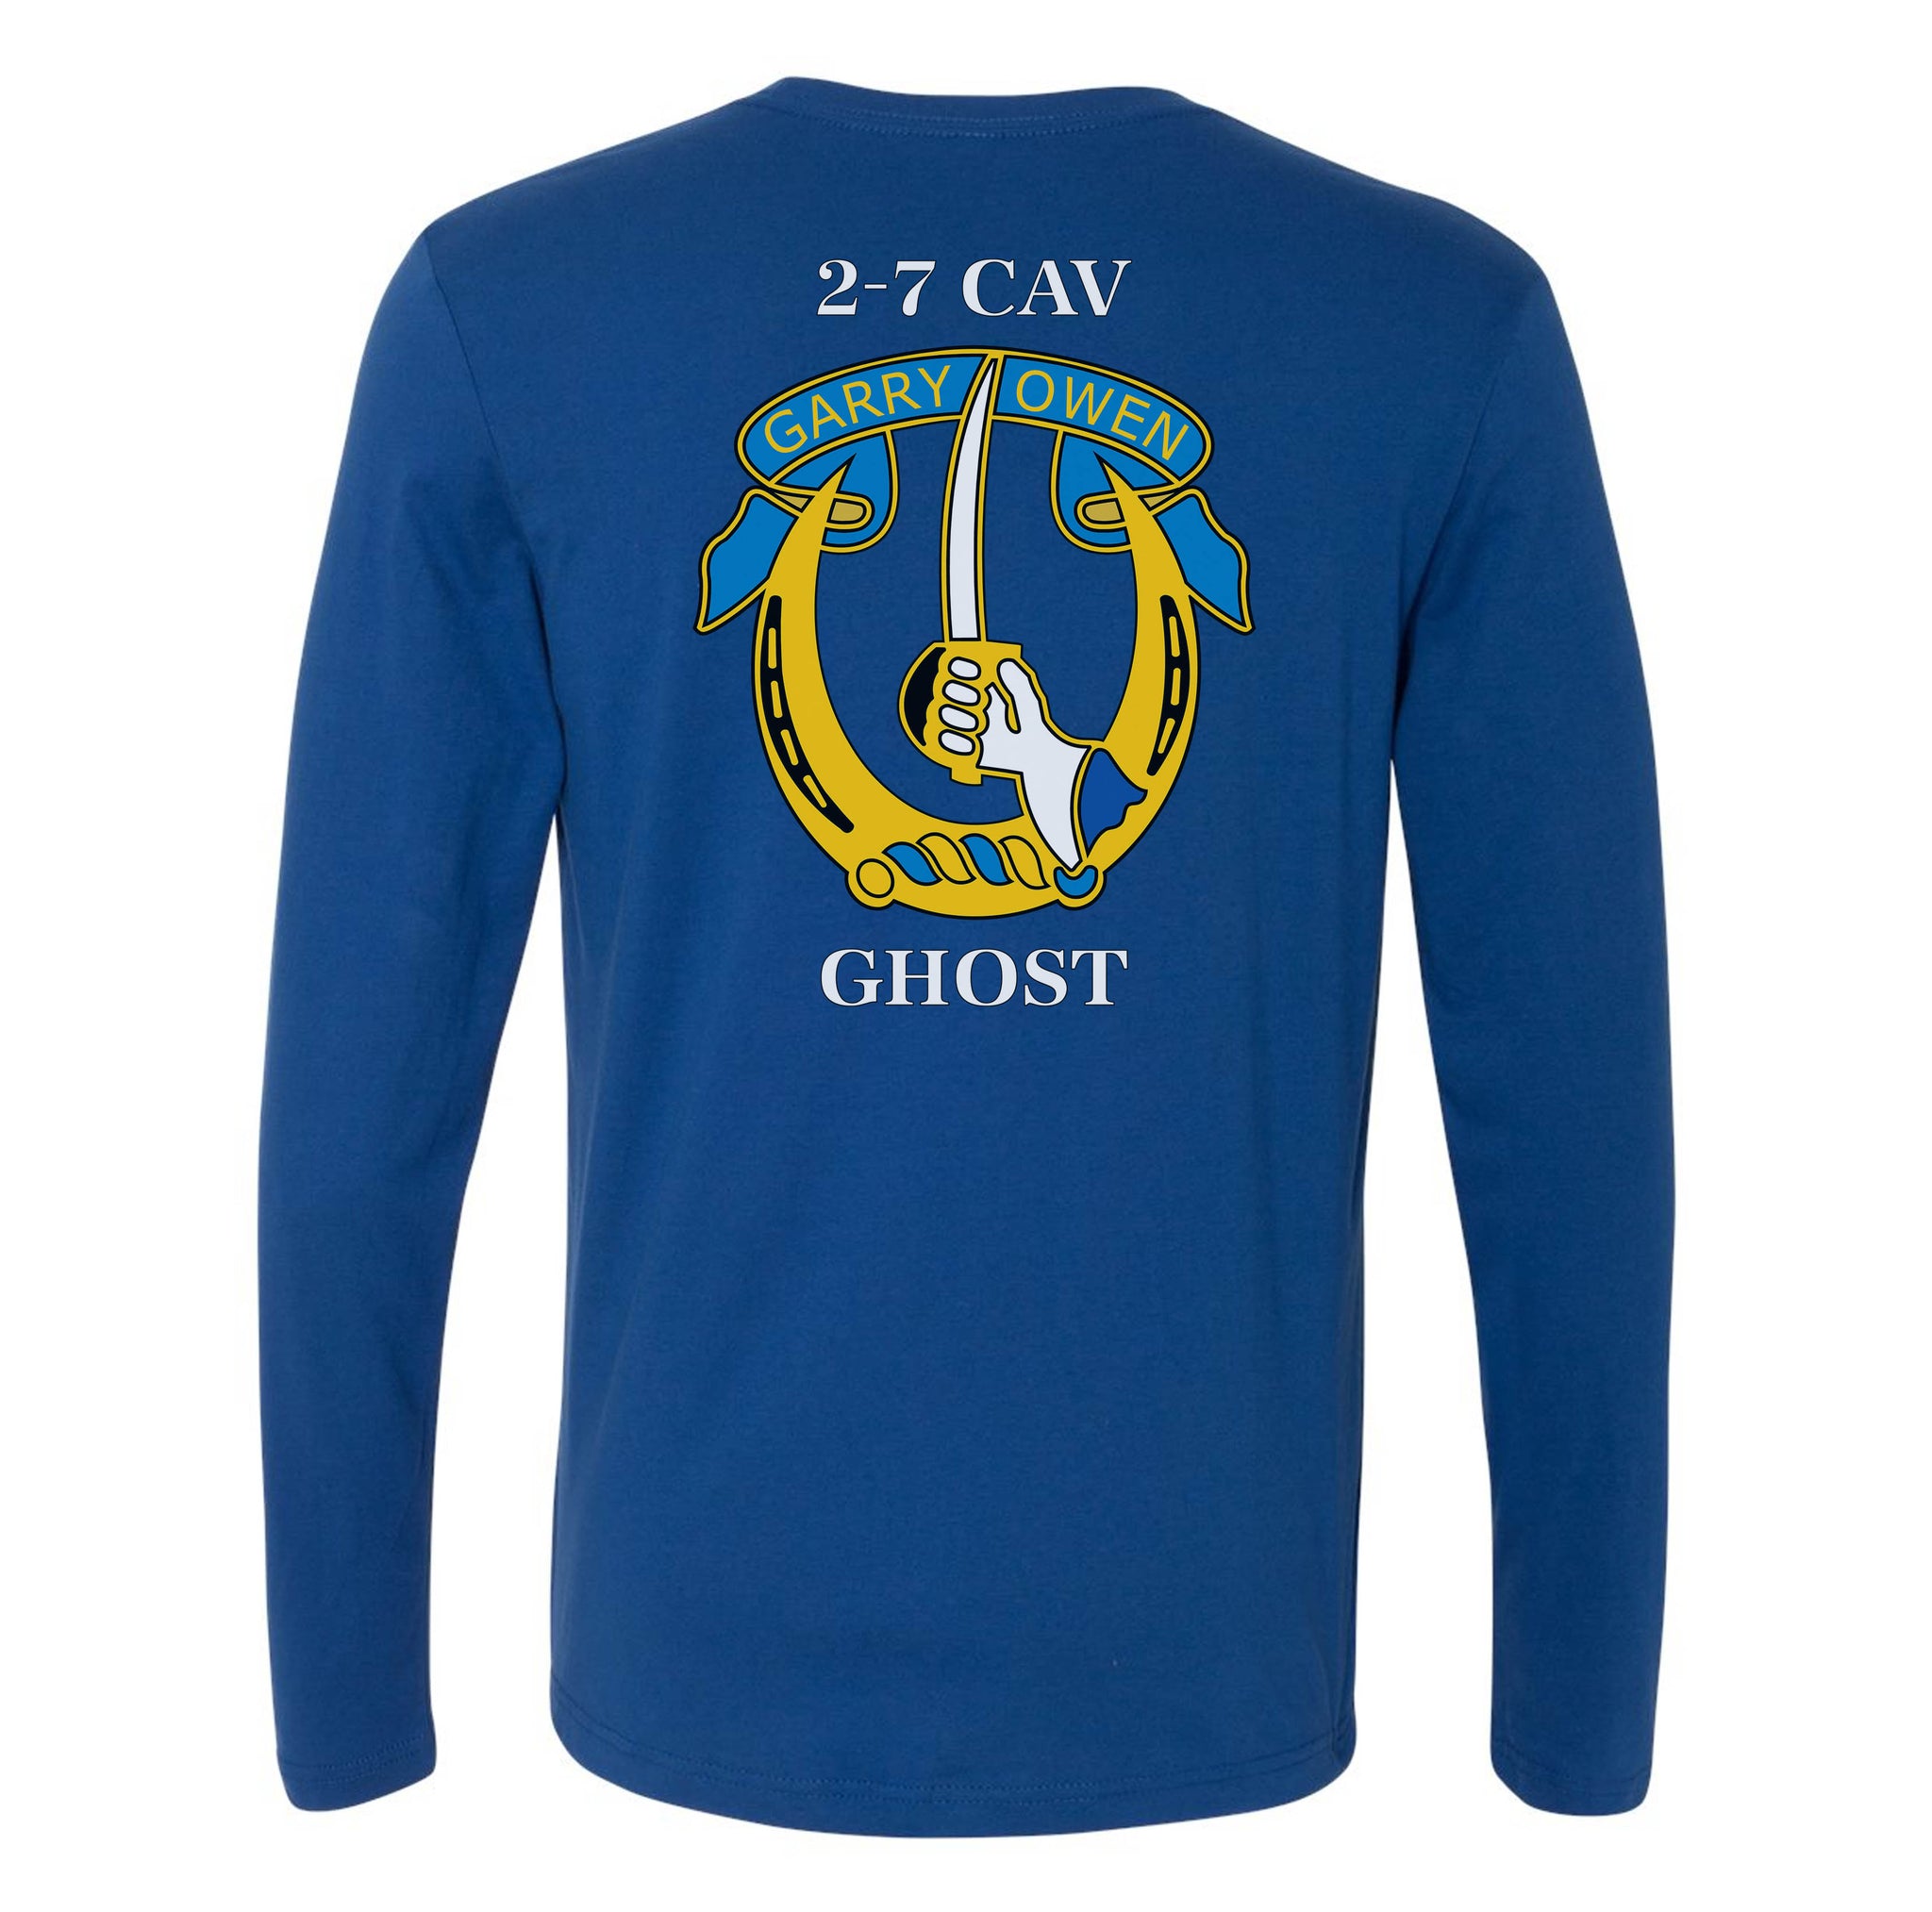 2-7 Ghost PT Long Sleeve Shirt